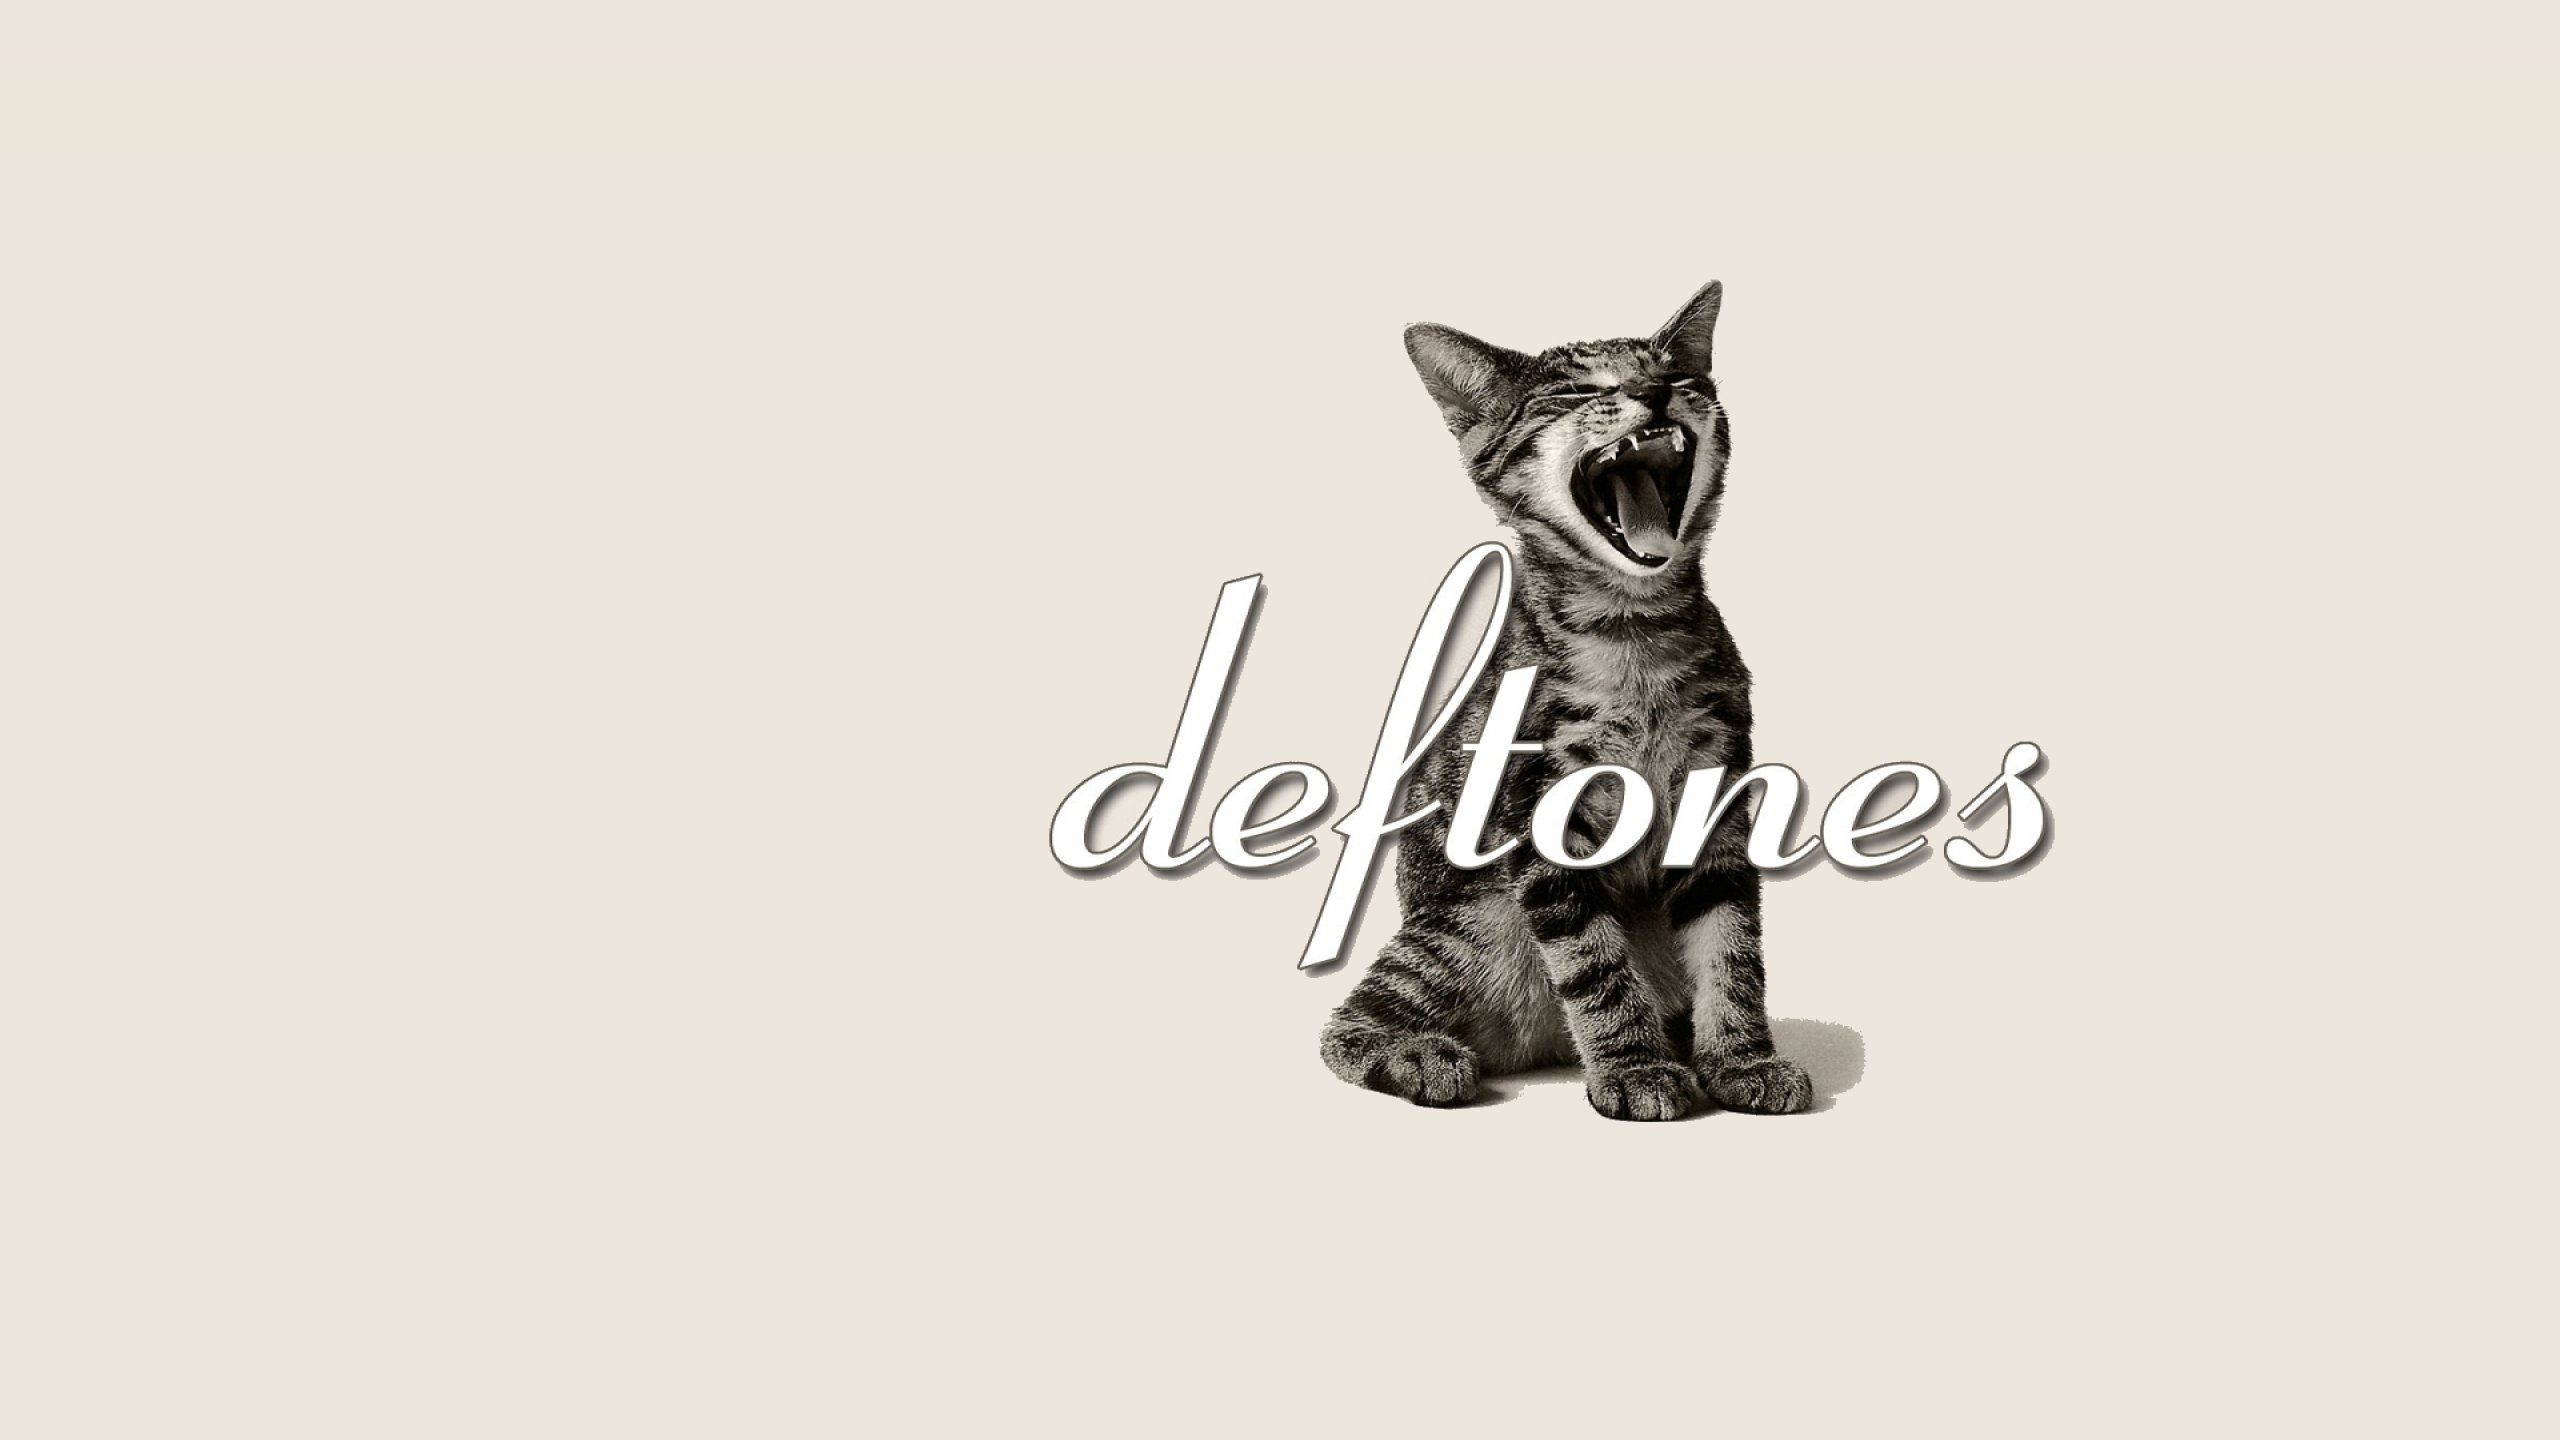 deftones, Alternative, Metal, Experimental, Rock, Nu metal, Heavy, Hard, Cat, Kitten Wallpaper